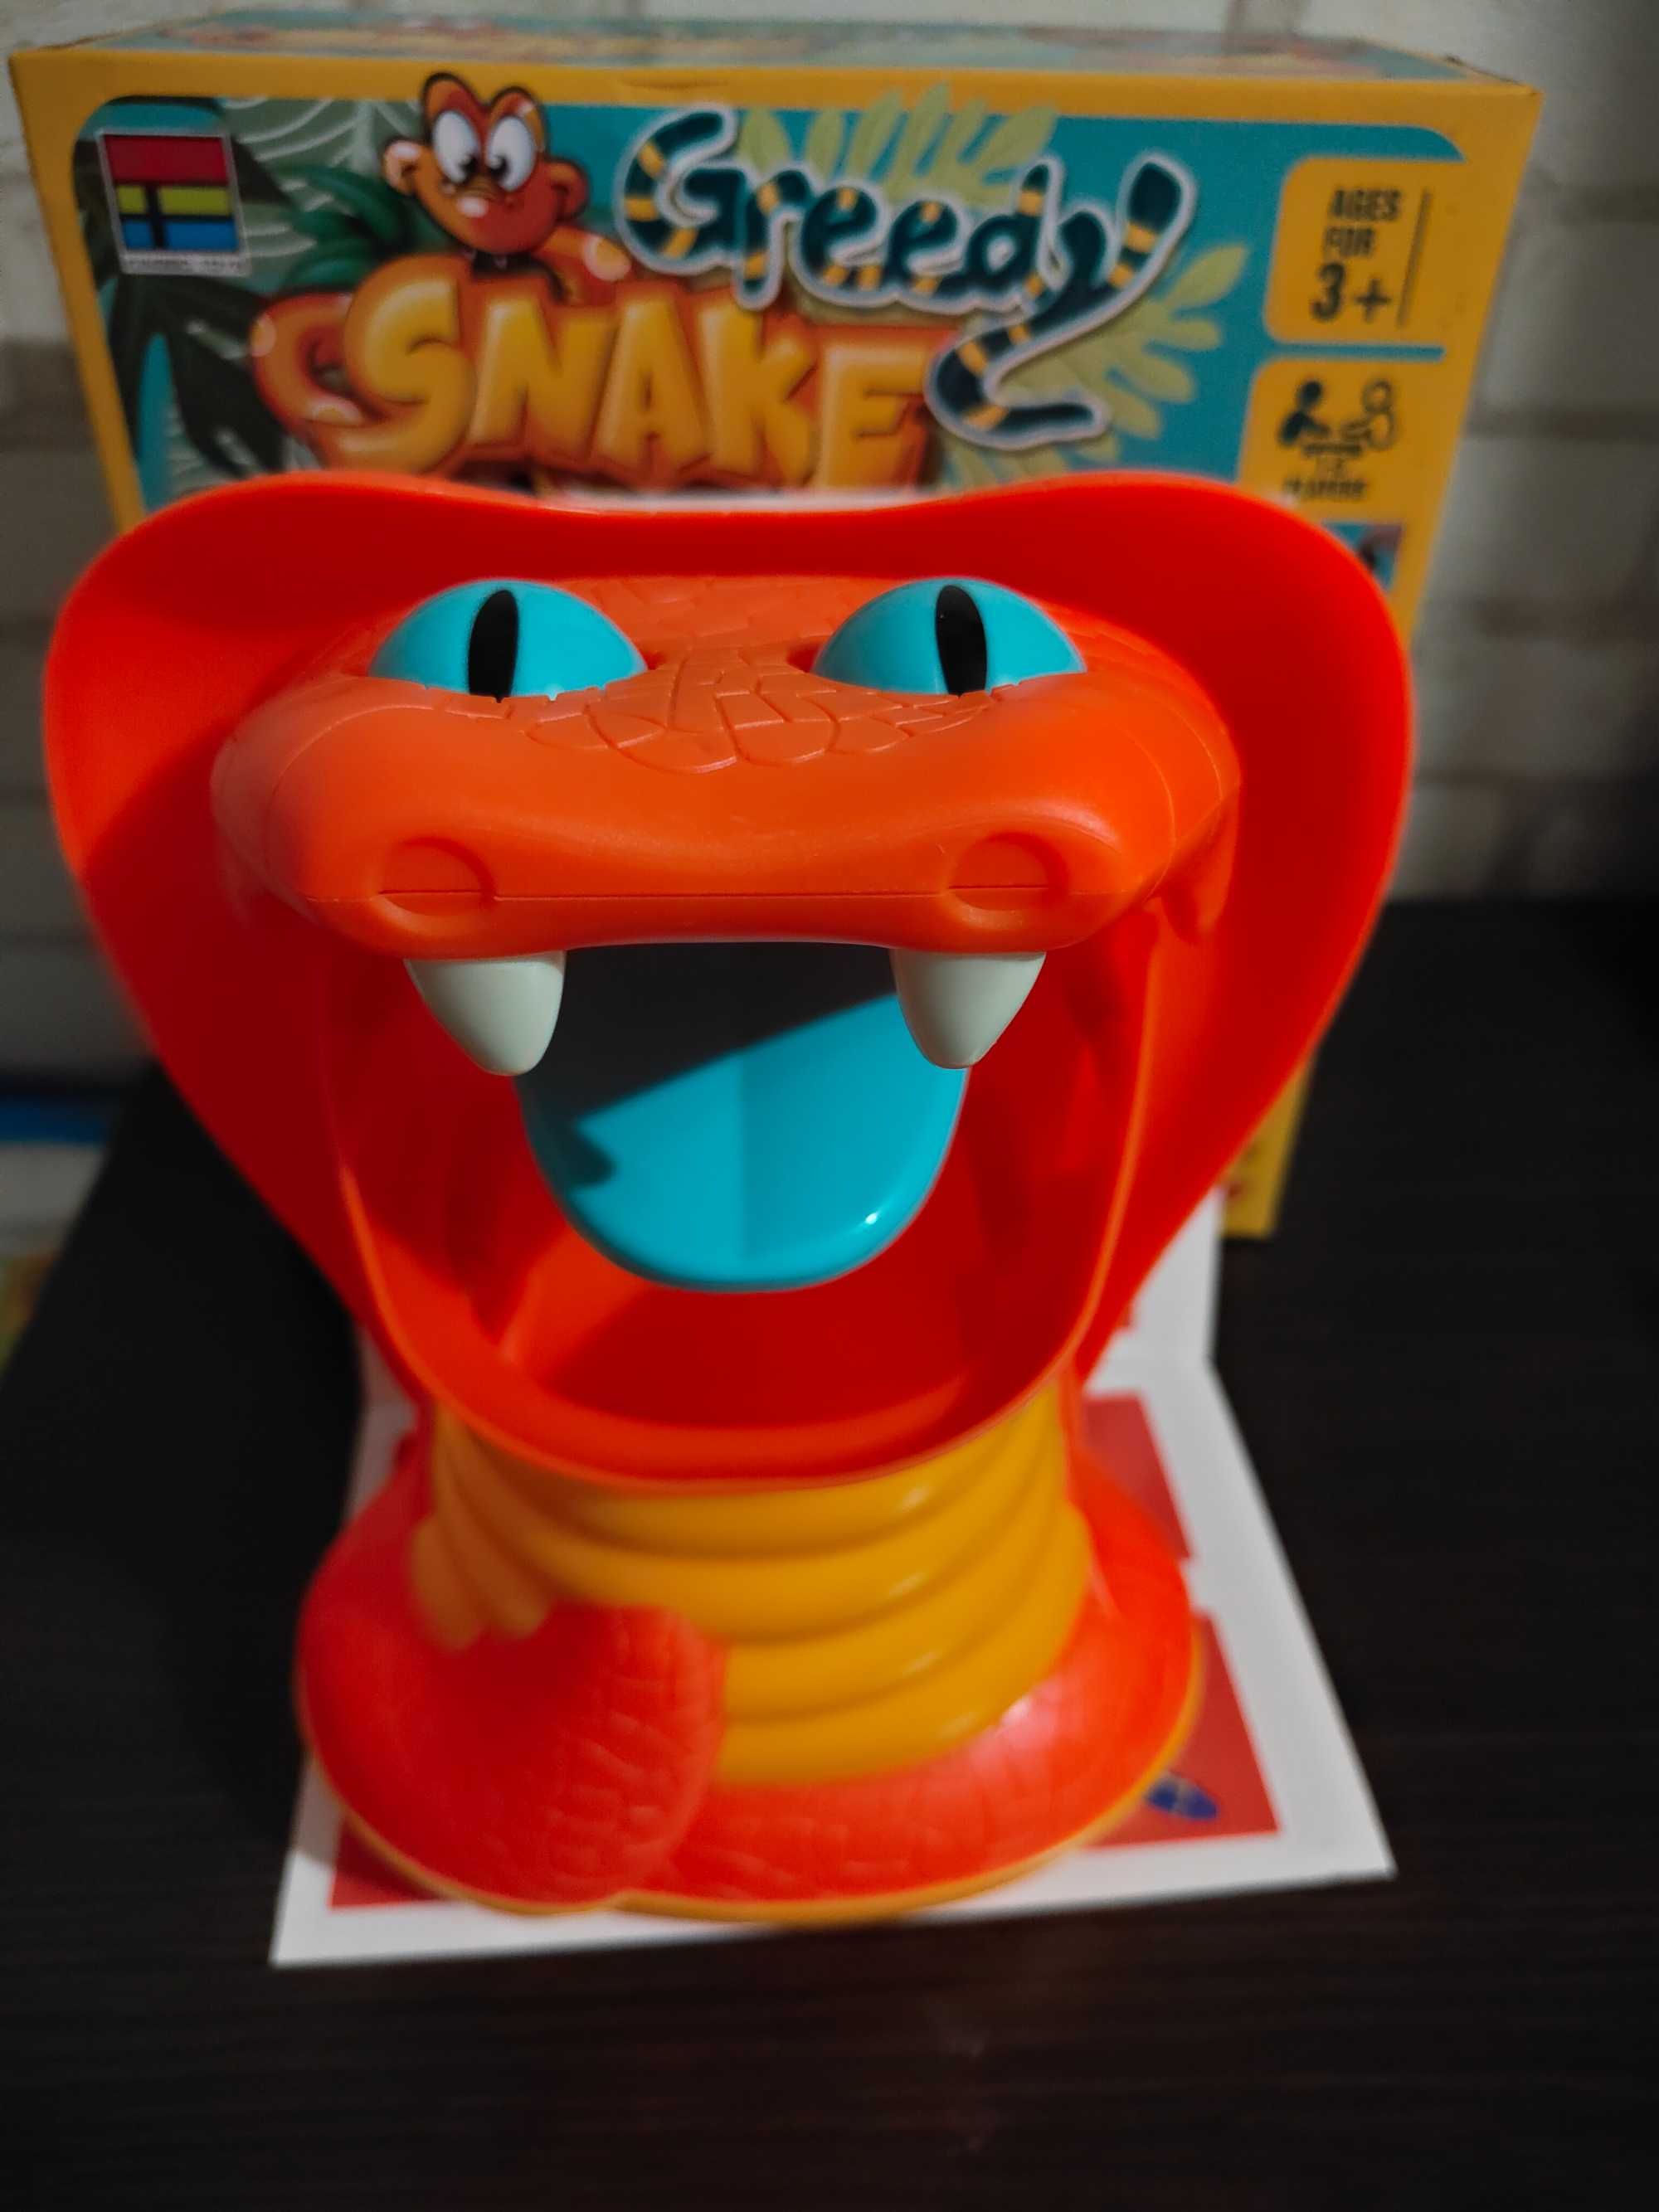 Настольная игра для детей "Жадная змея" Greedy Snake